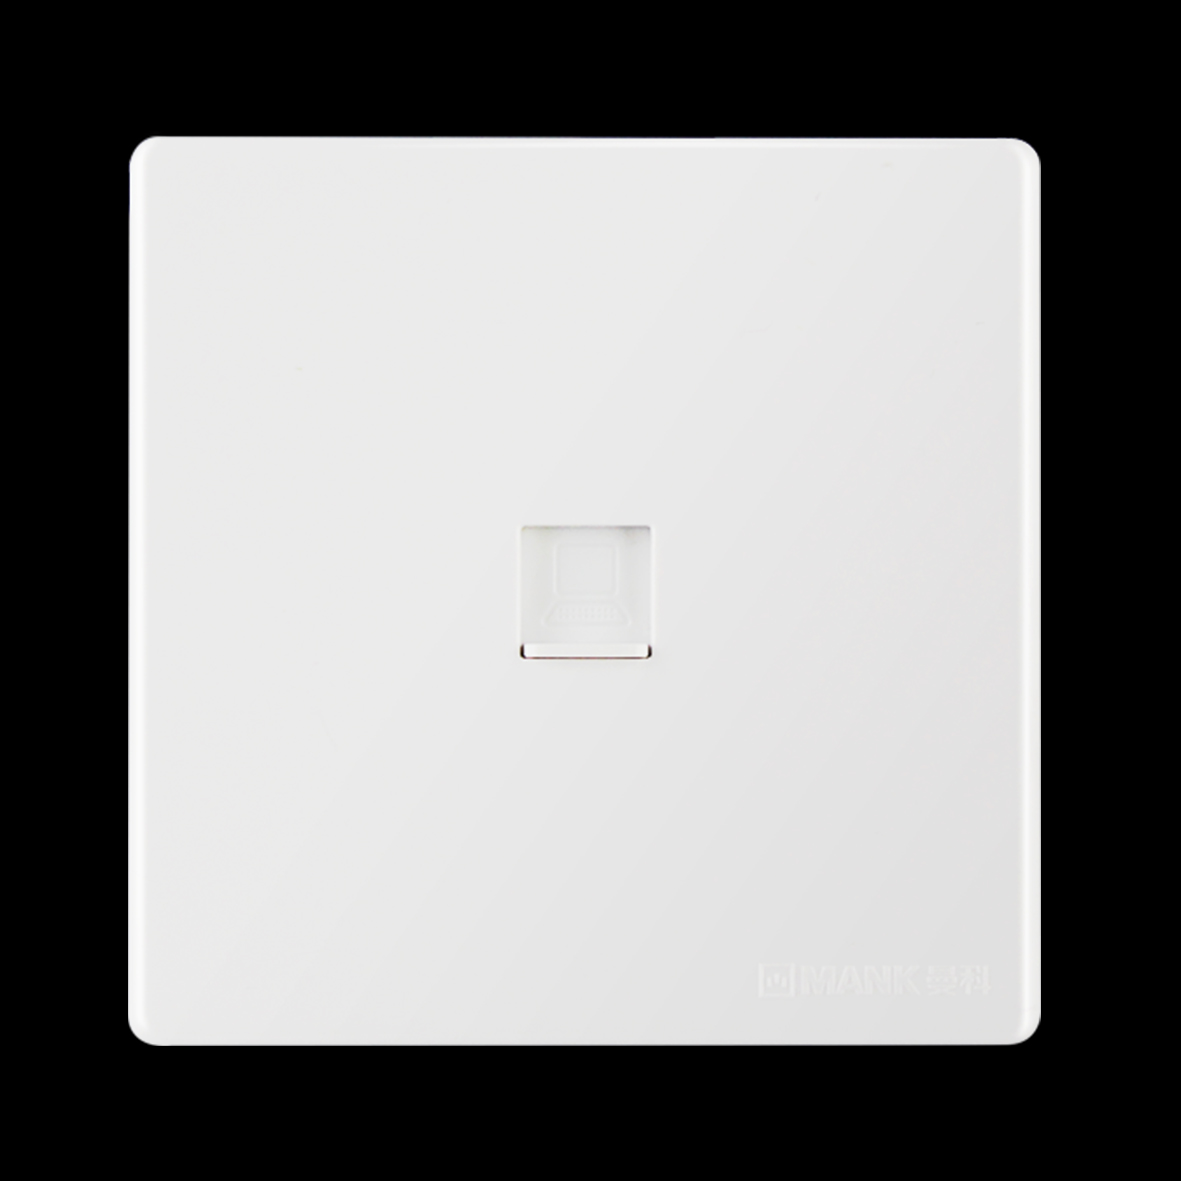 Meijia_One computer plug (piano white)